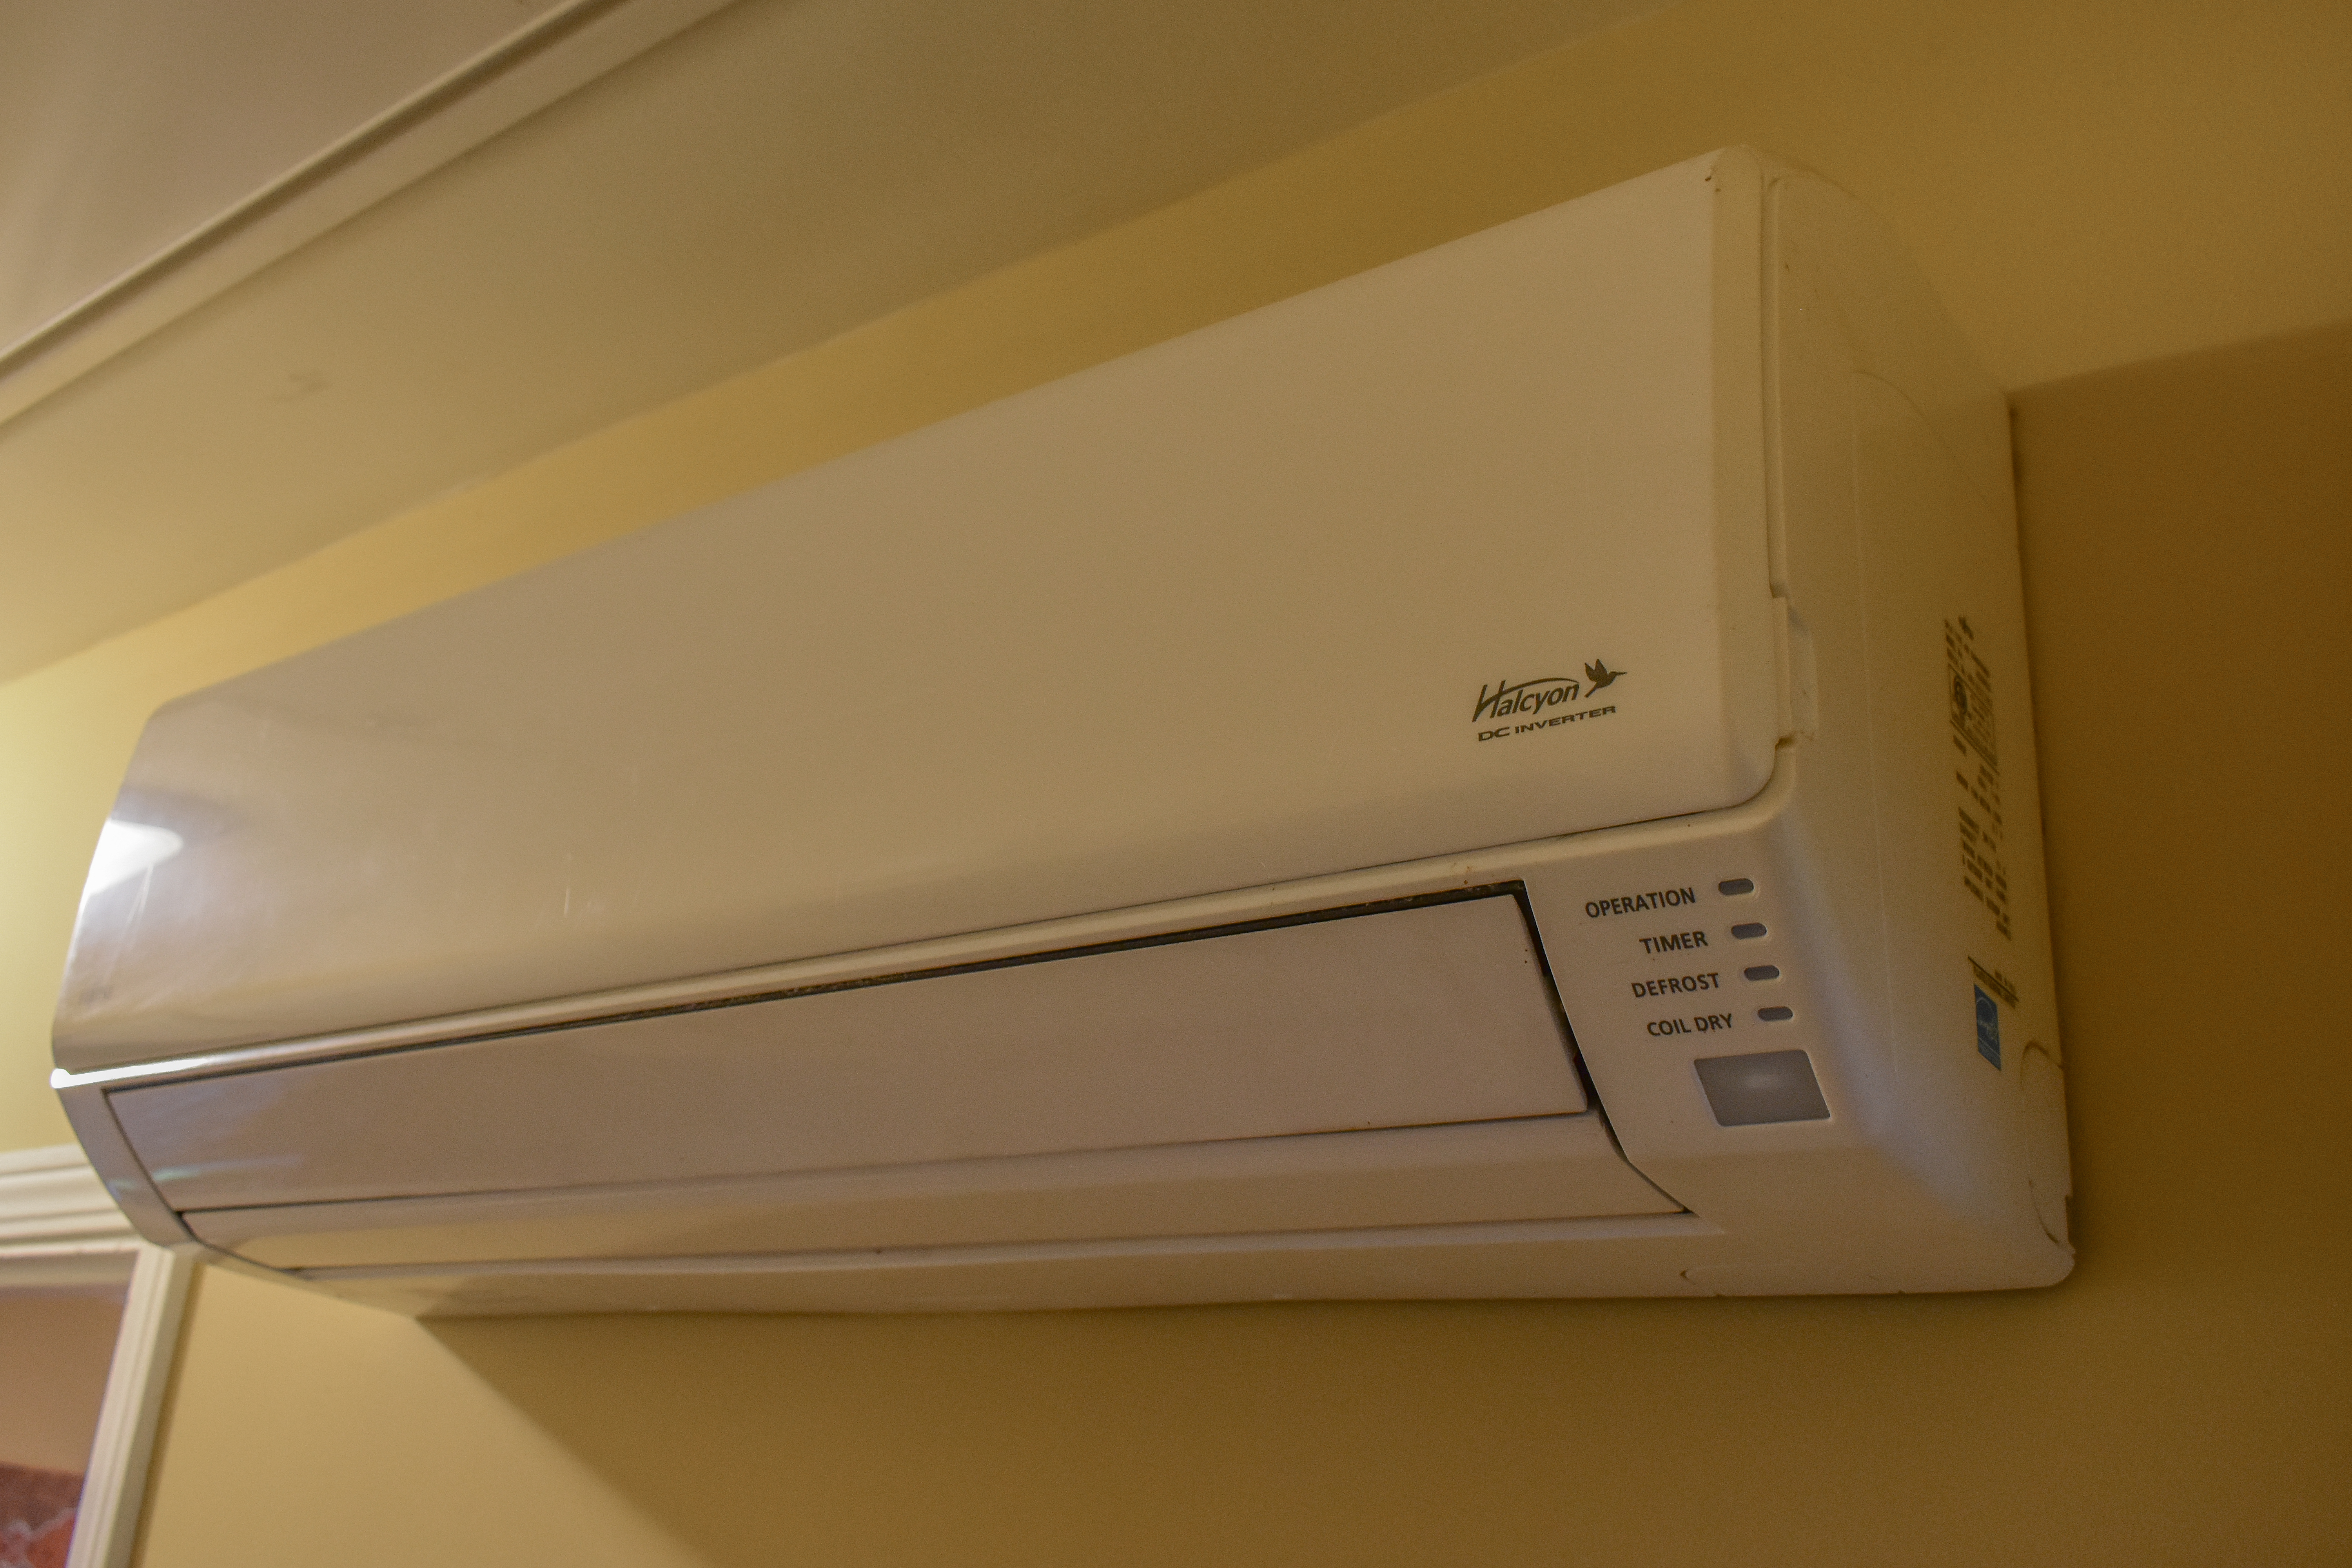 a heat pump air conditioning